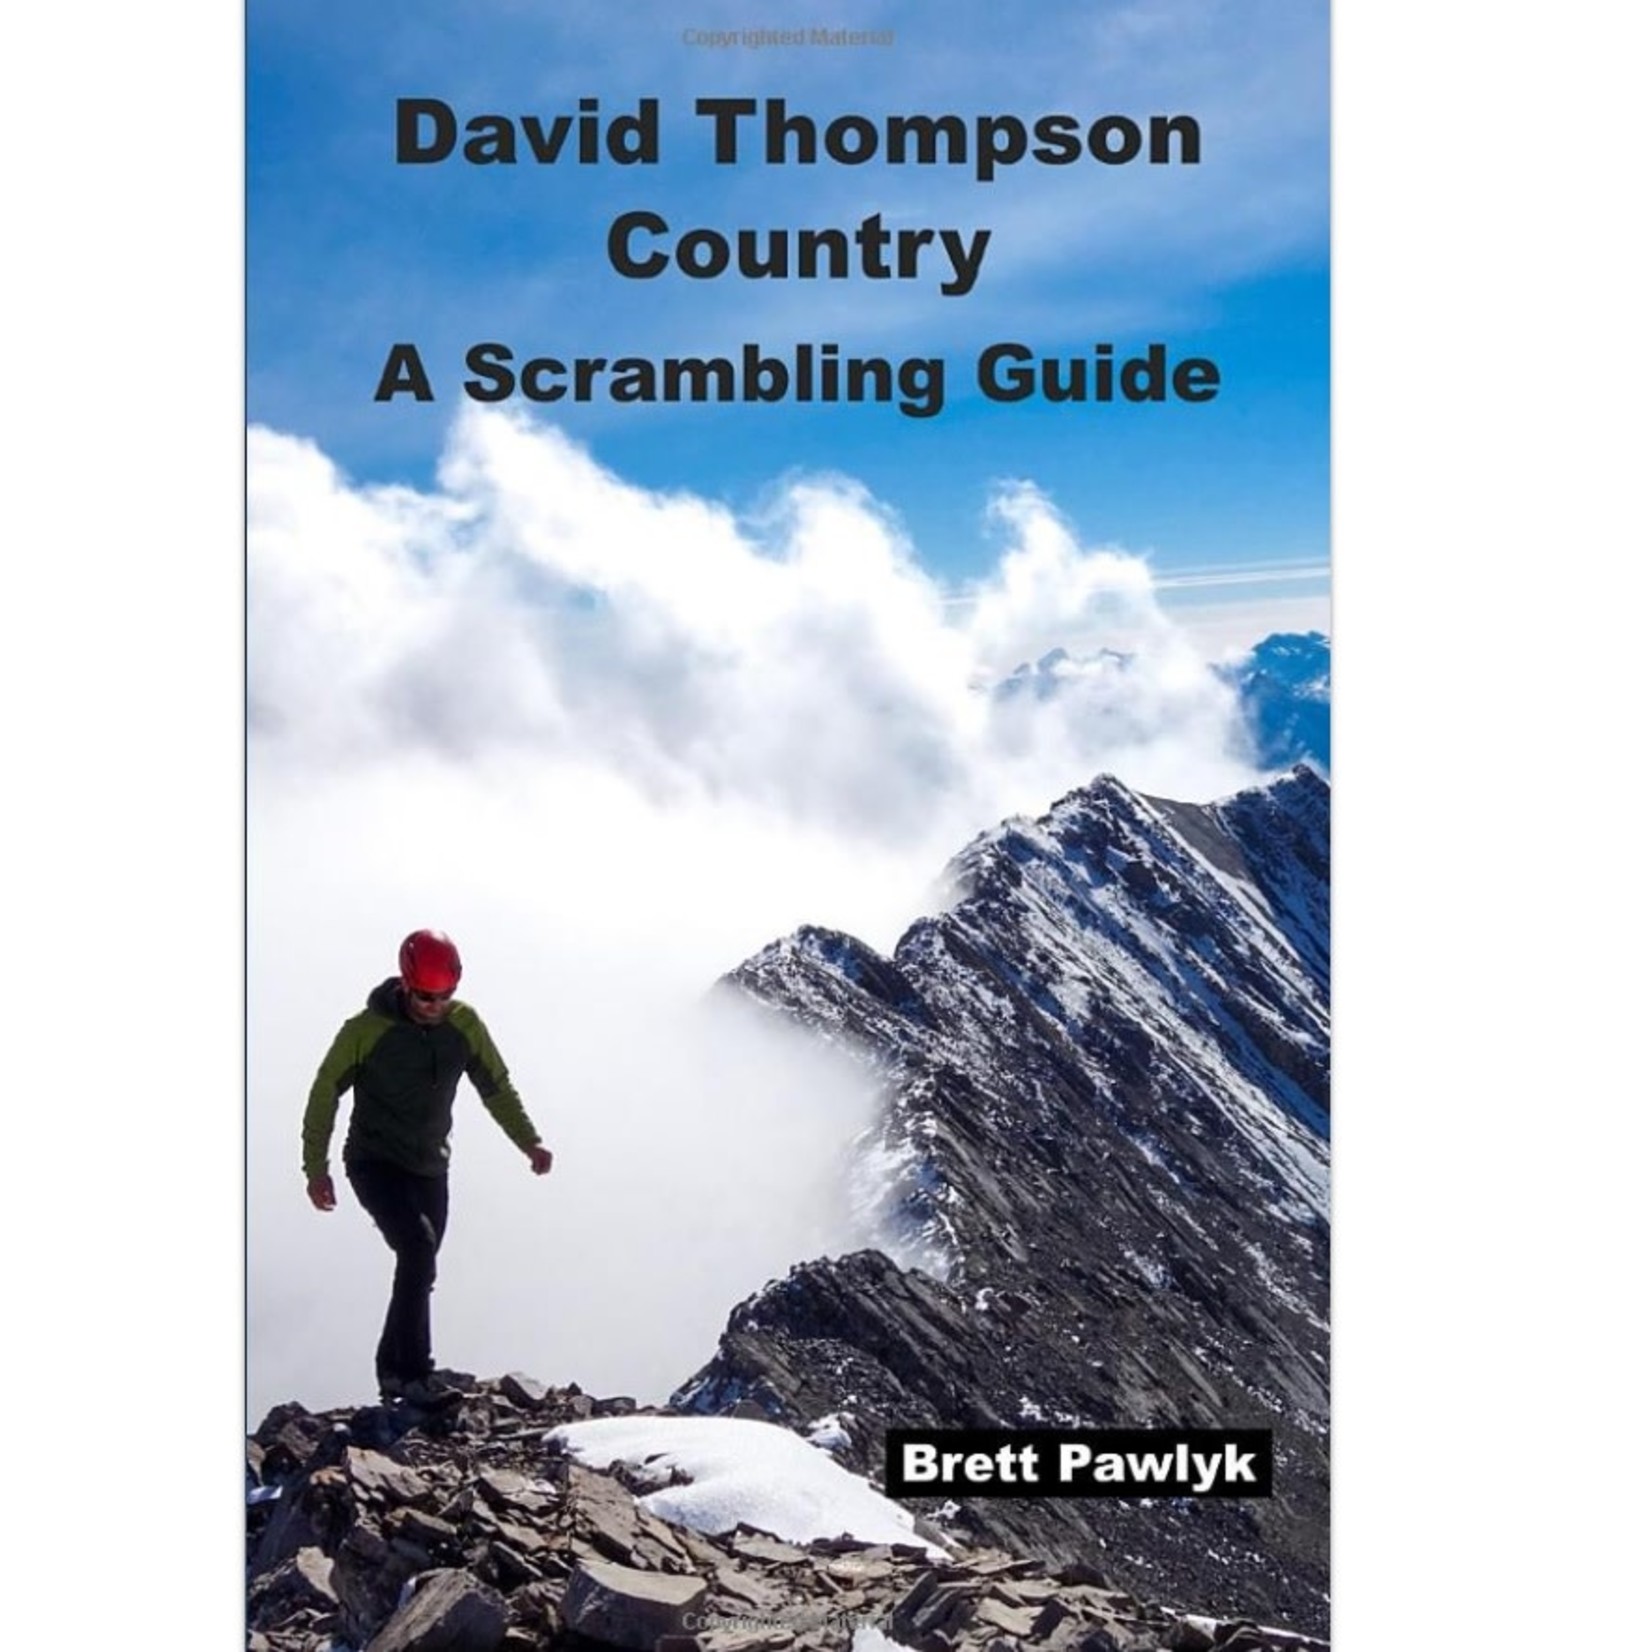 Brett Pawlyk Livre guide David Thompson Scrambling